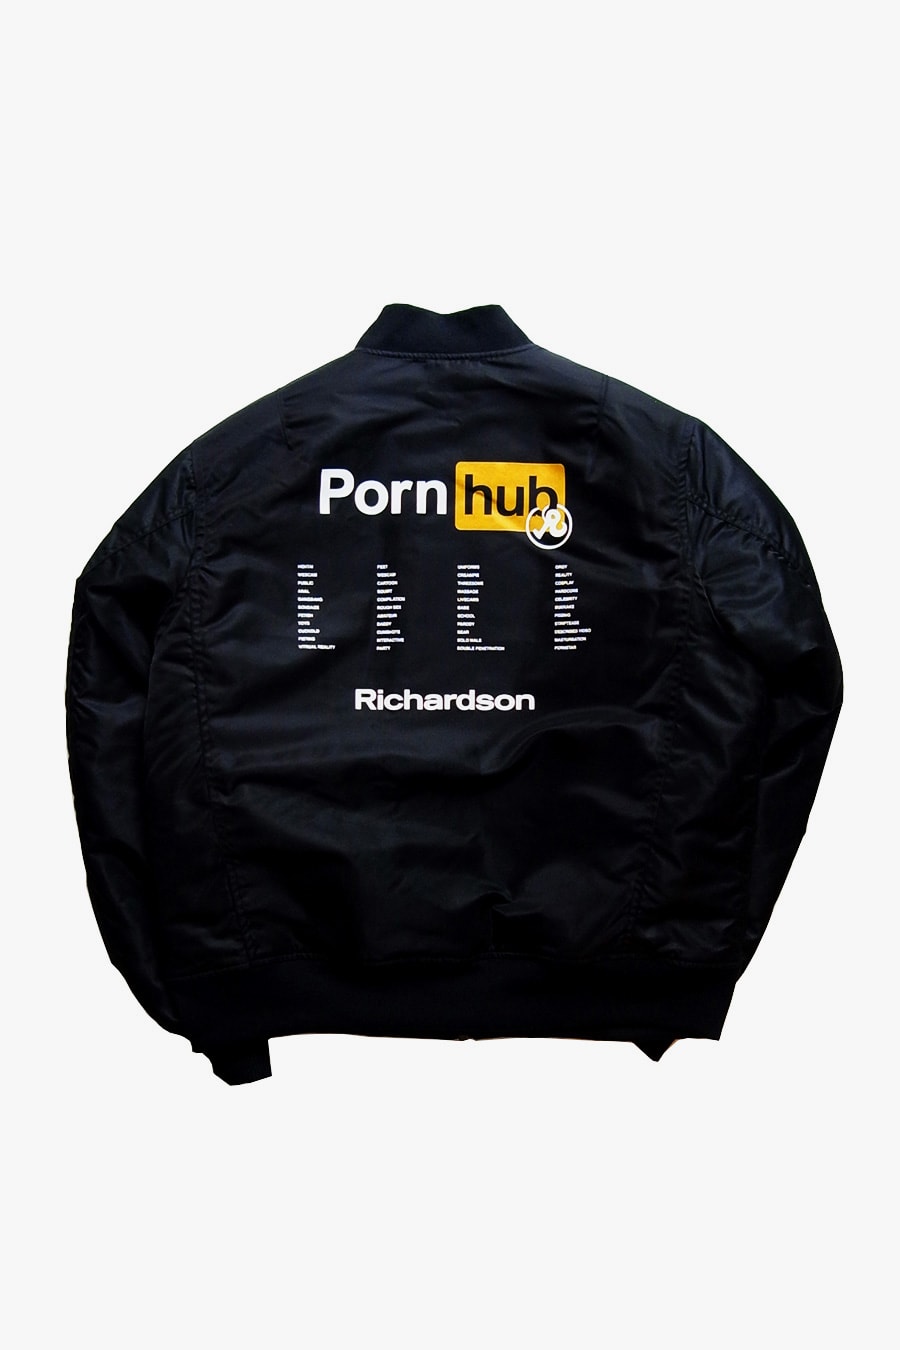 Richardson x PornHub Capsule Collaboration cap hoodie t shirt long sleeve short sleeve MA 1 swimsuit tote